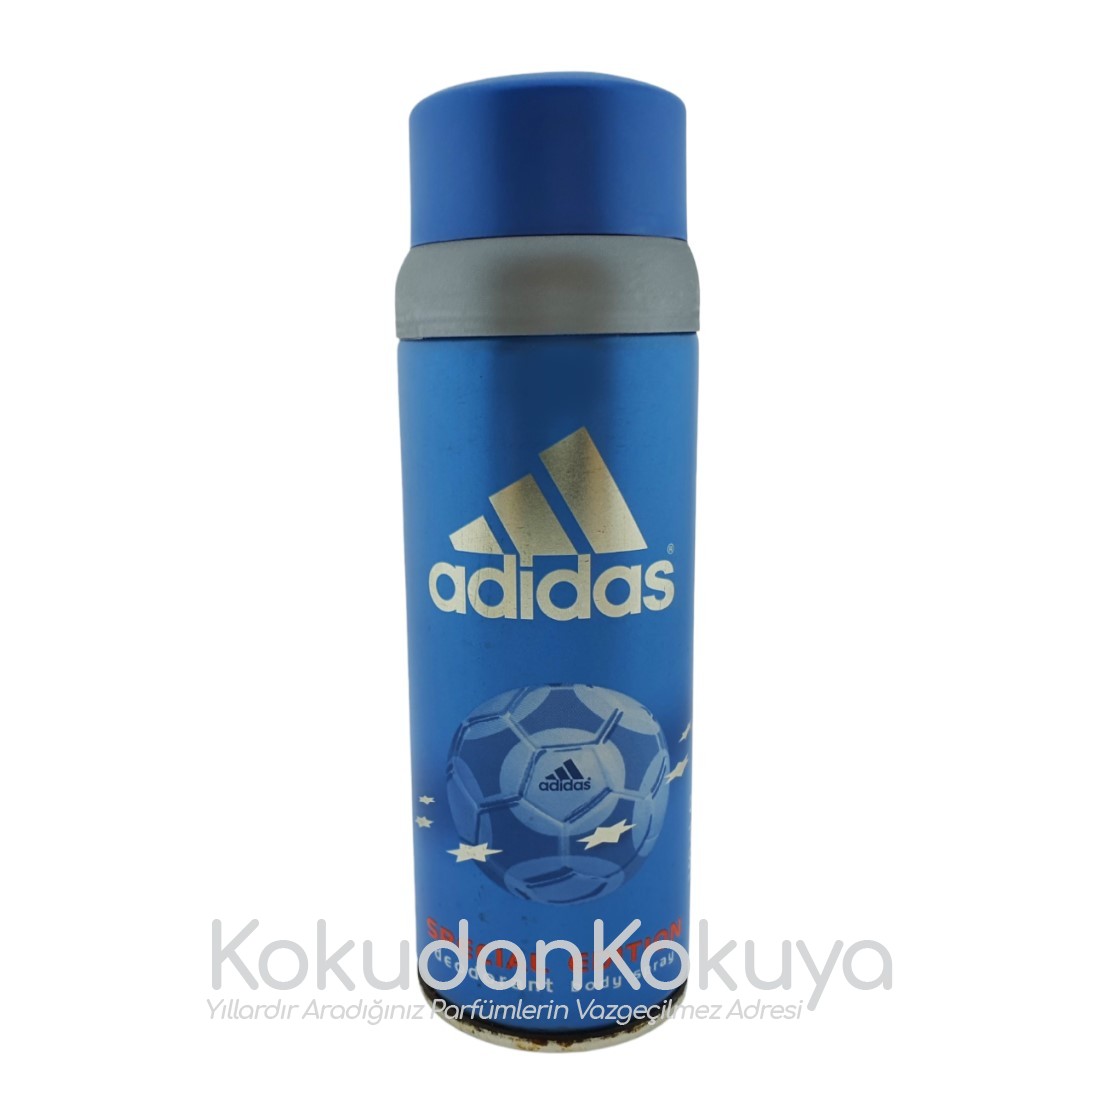 ADIDAS Special Edition (Blue) Deodorant Erkek 150ml Deodorant Spray (Metal) Sprey 